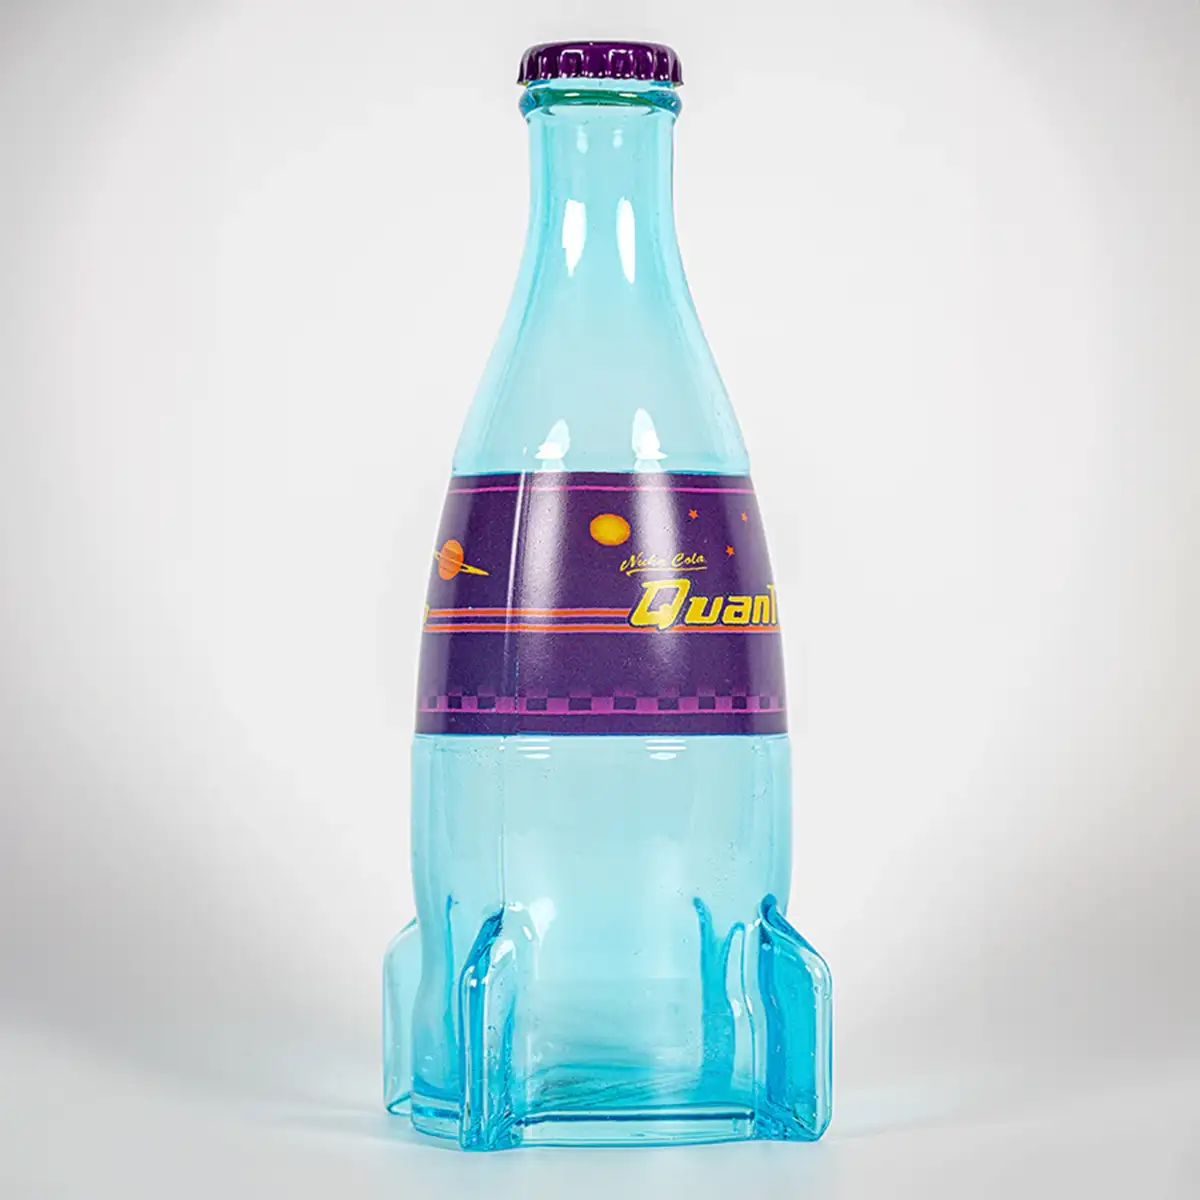 Fallout "Nuka Cola Quantum" Glasflasche und Kronkorken Image 5